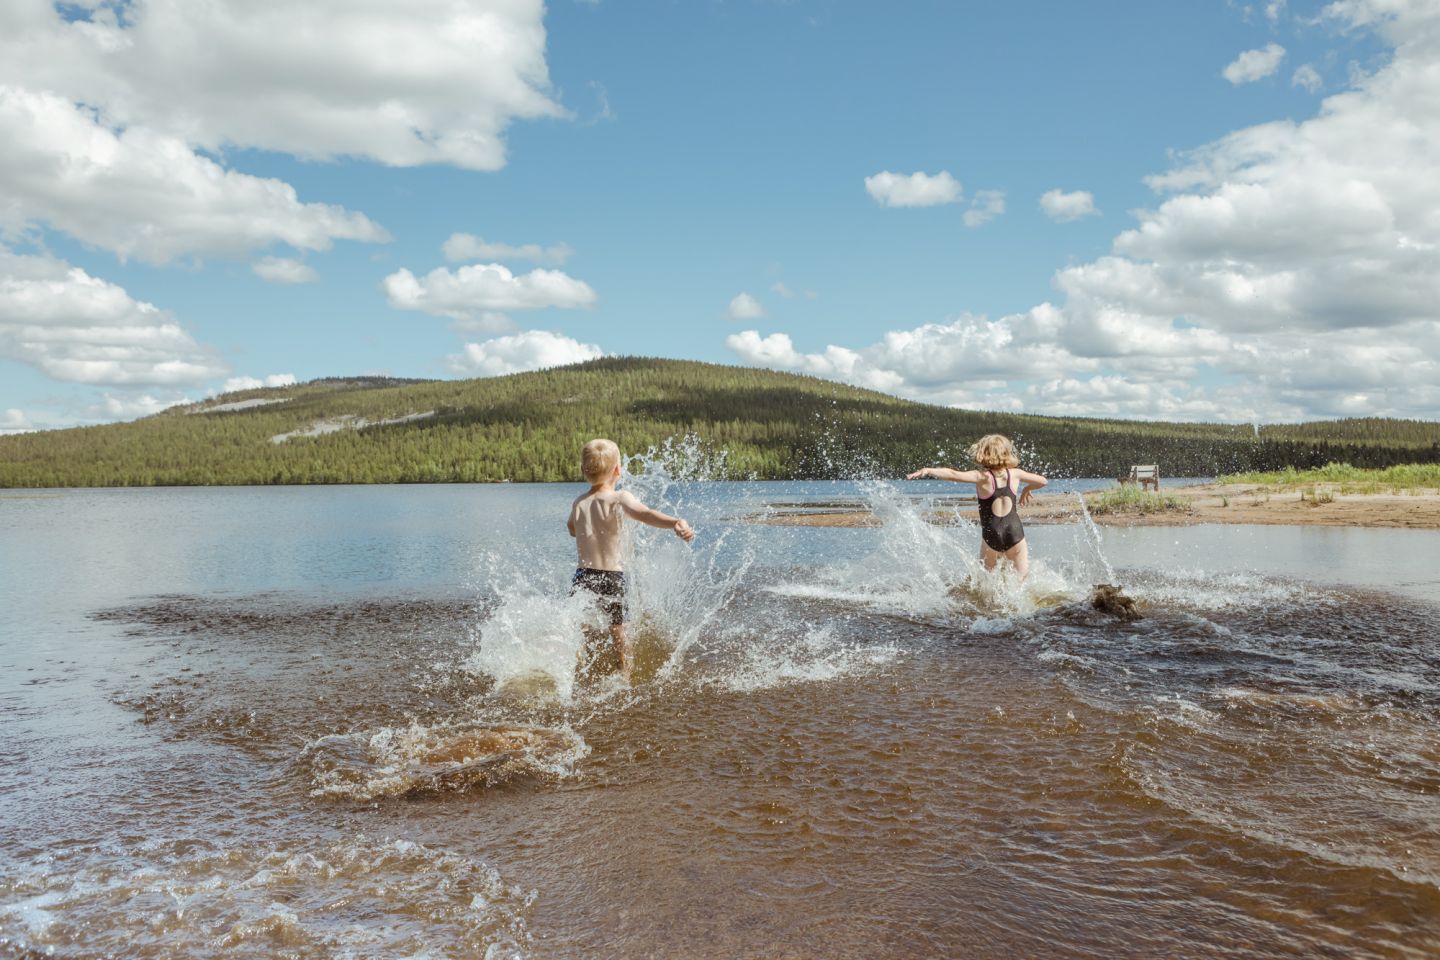 Children enjoying the water in Pyhä & Luosto in Lapland